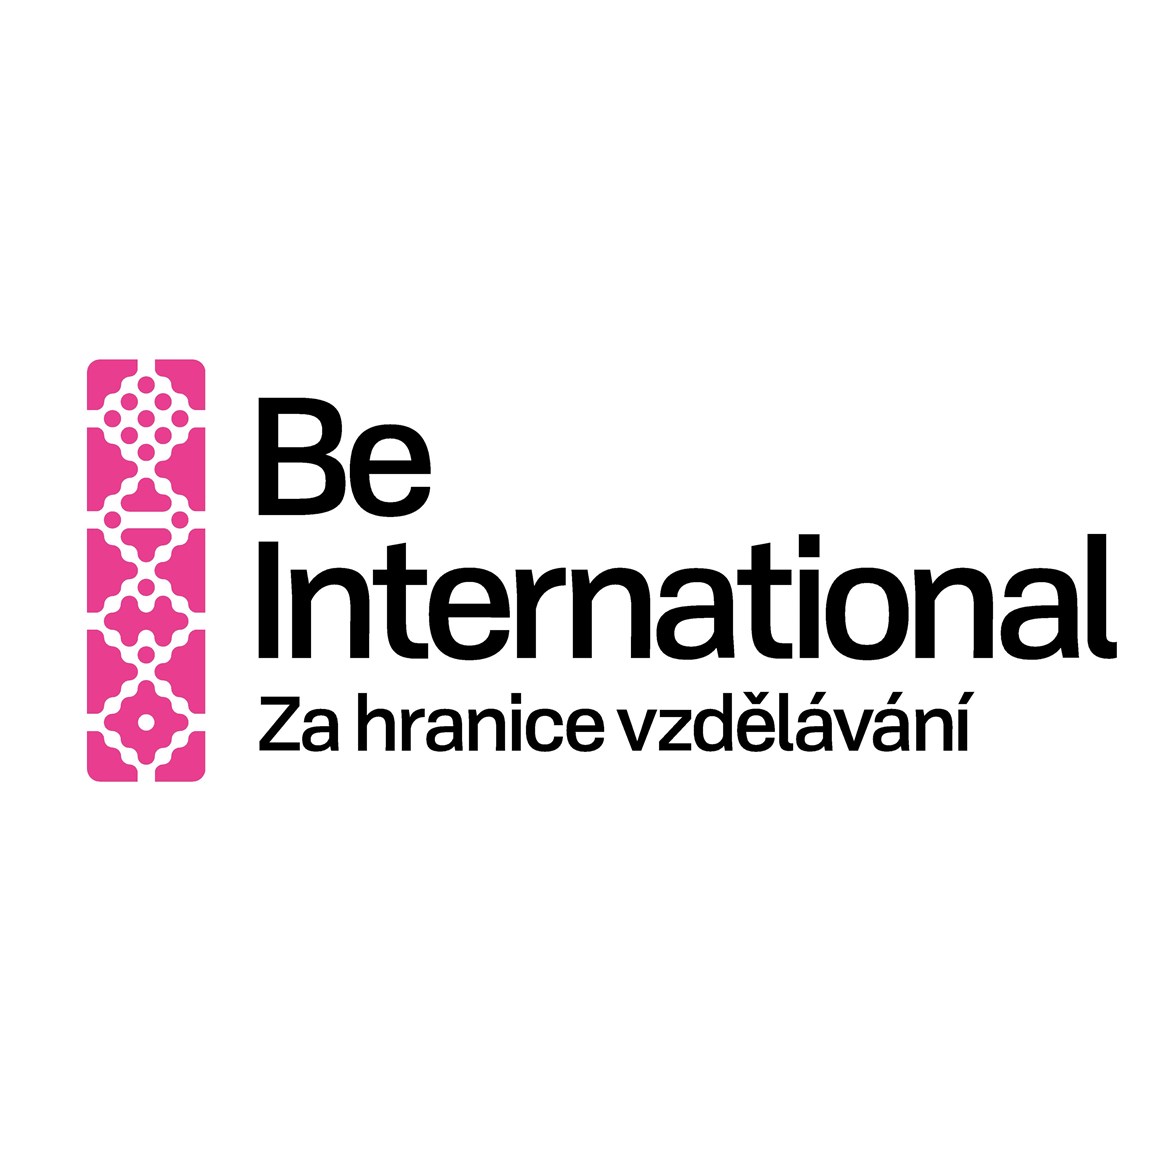 Be International